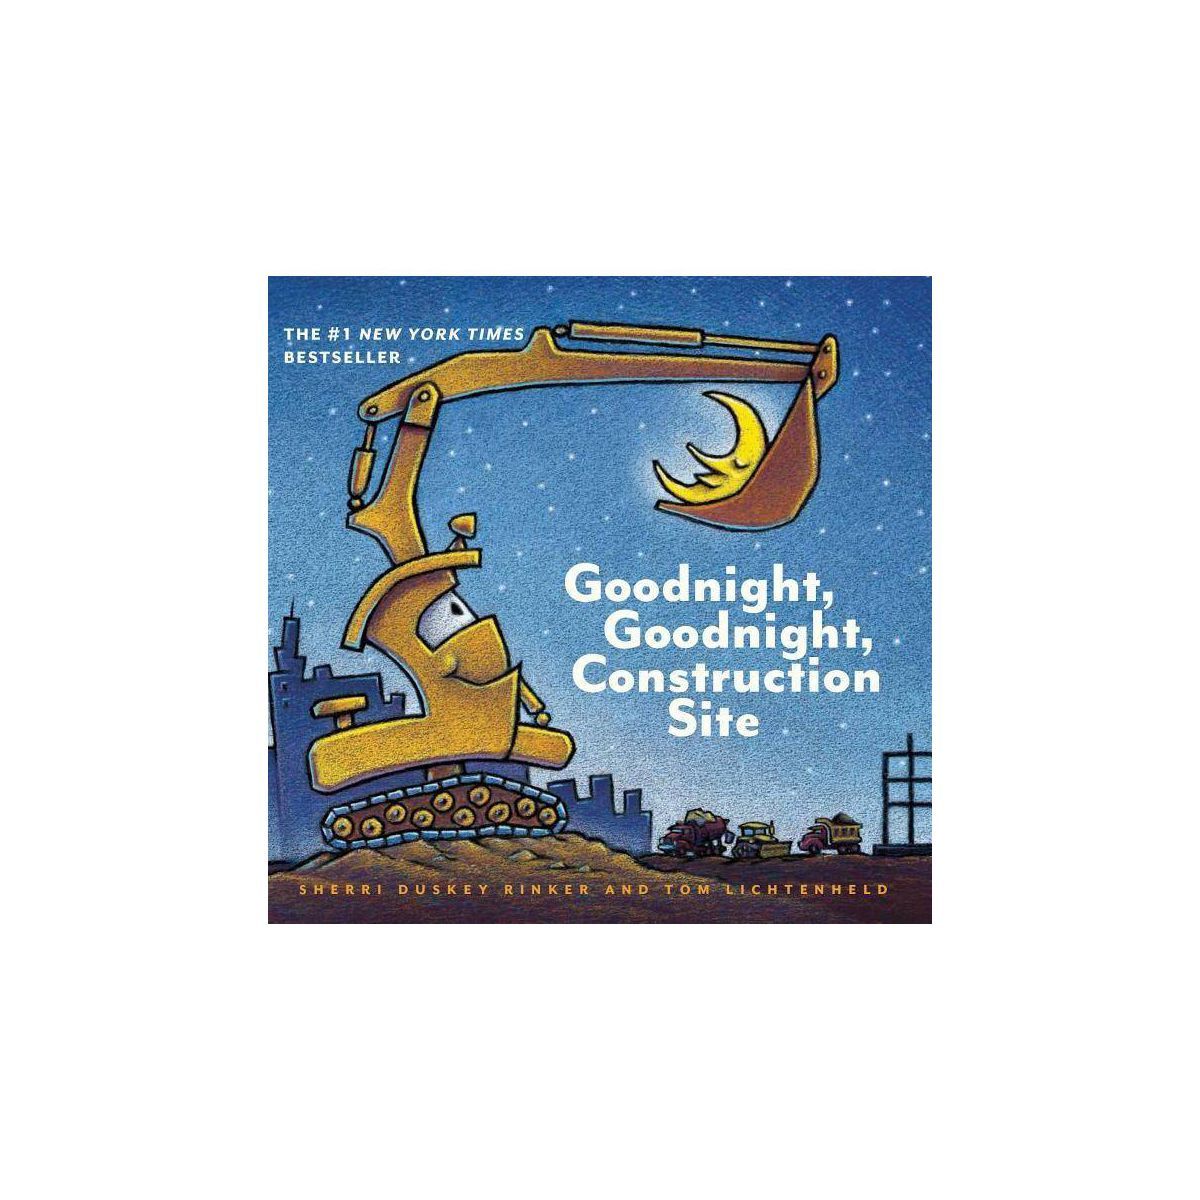 Goodnight, Goodnight, Construction Site - by Sherri Duskey Rinker | Target